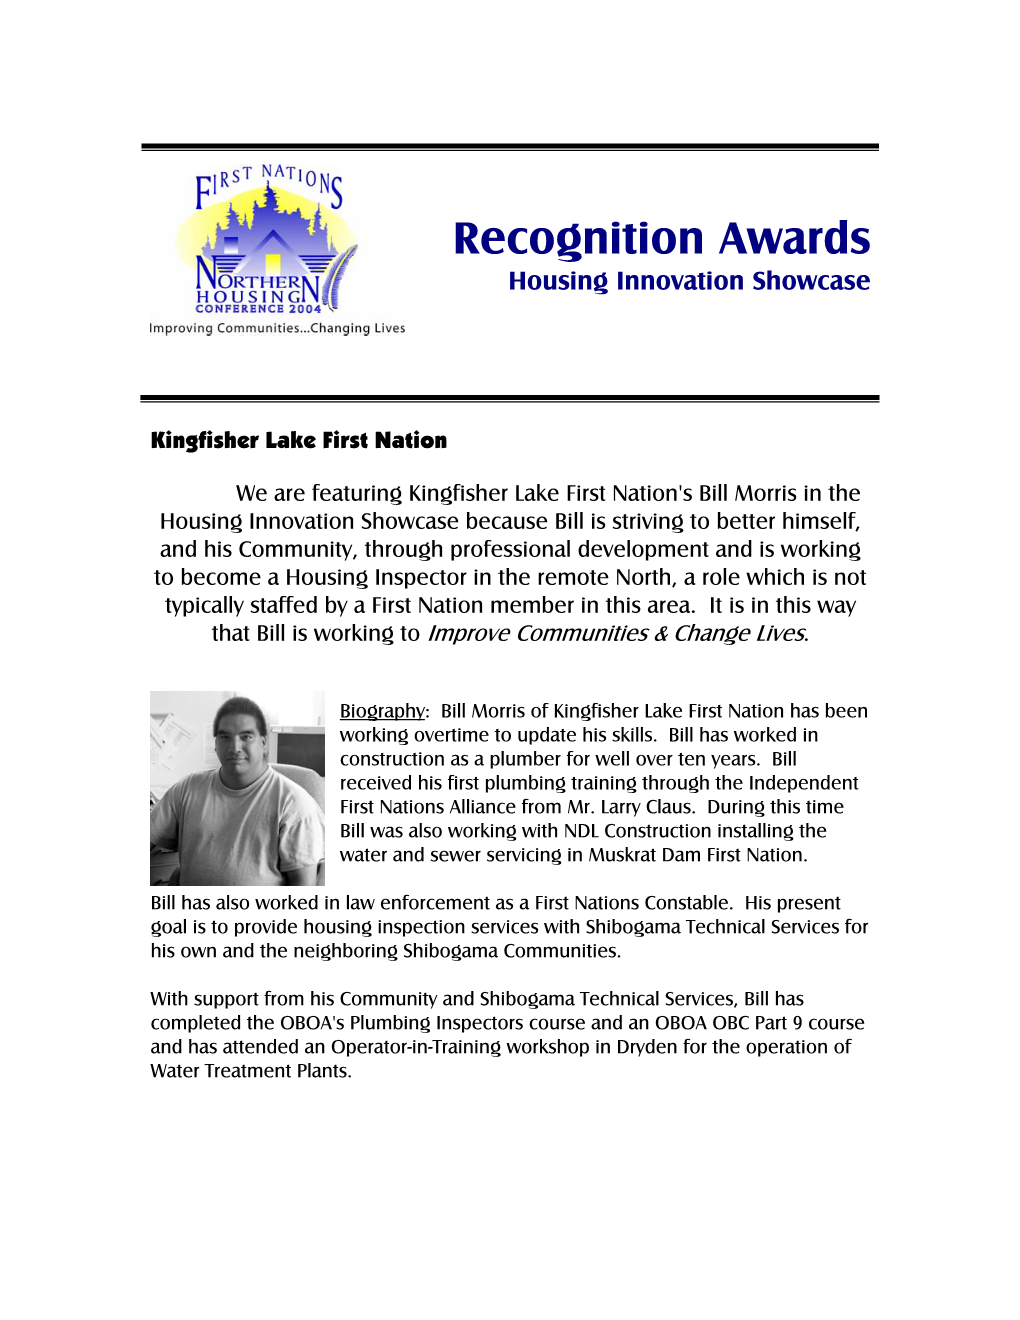 Recognition Awards Housing Innovation Showcase